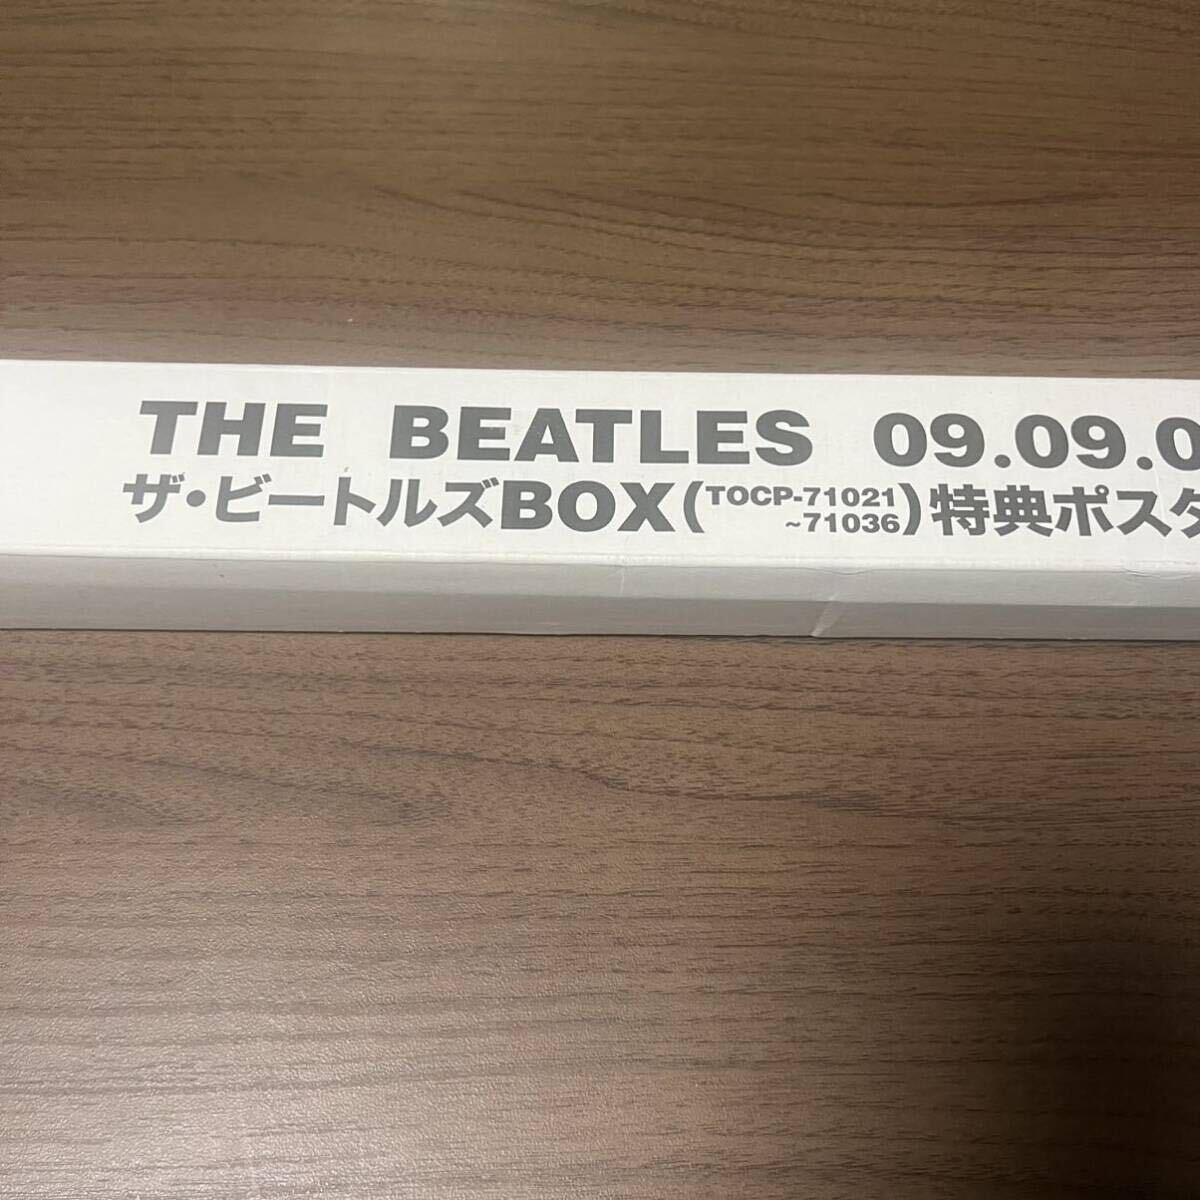 The Beatles box ザビートルズボックス 特典ポスター09.09.09 ビートルズ 非売品_画像3